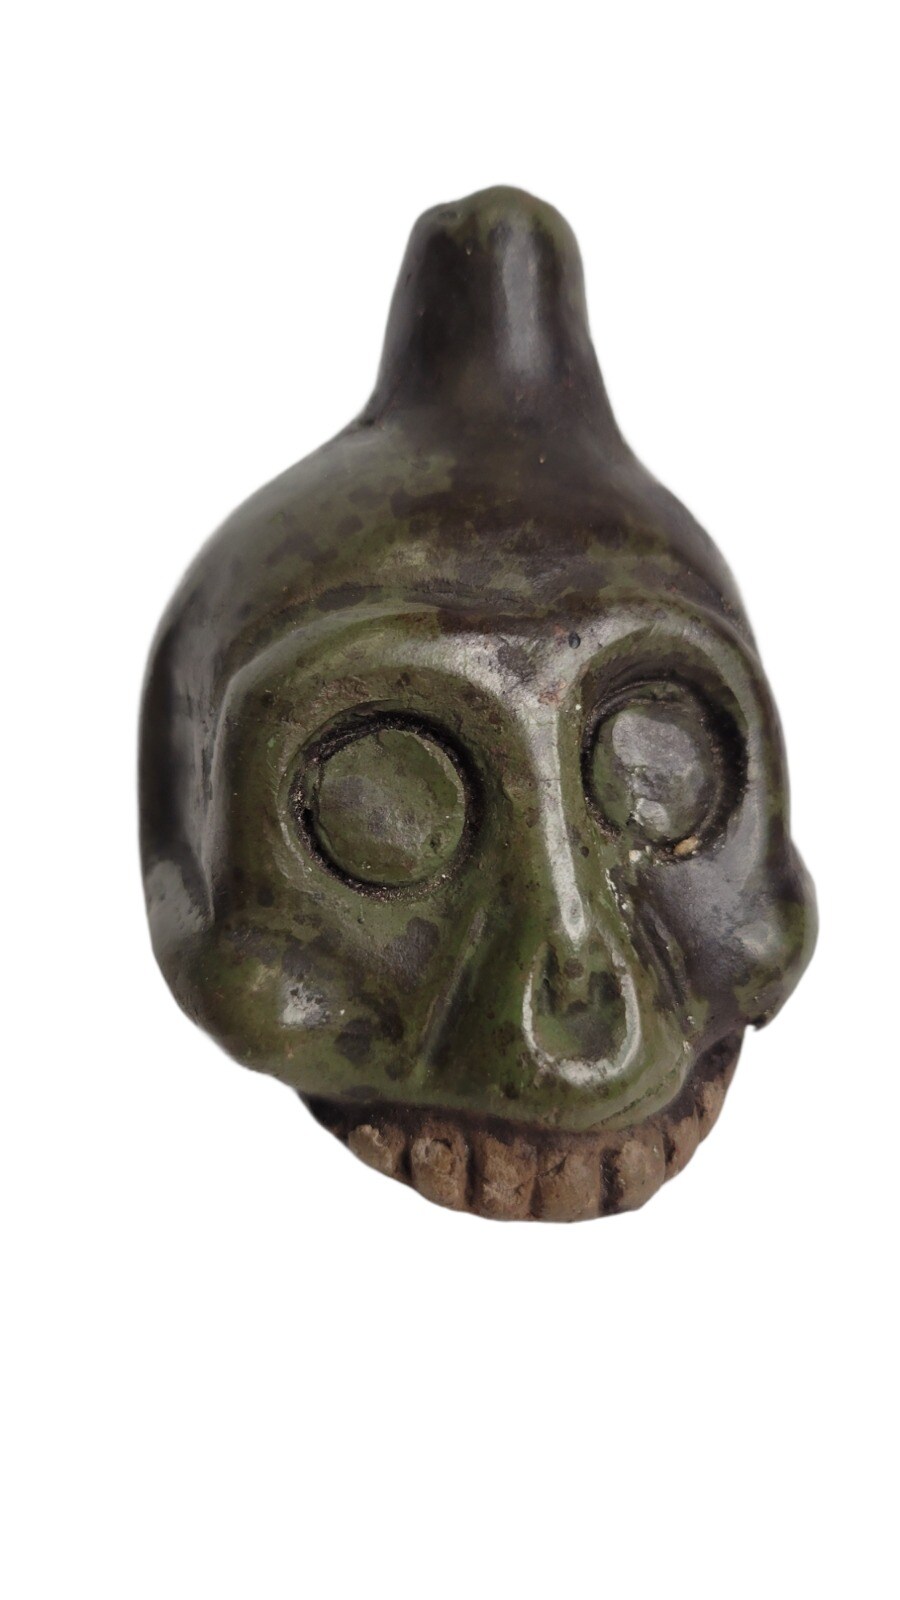 Half Skull Aztec Whistle, Aztec Death Whistle, Clay Aztec Whistle.